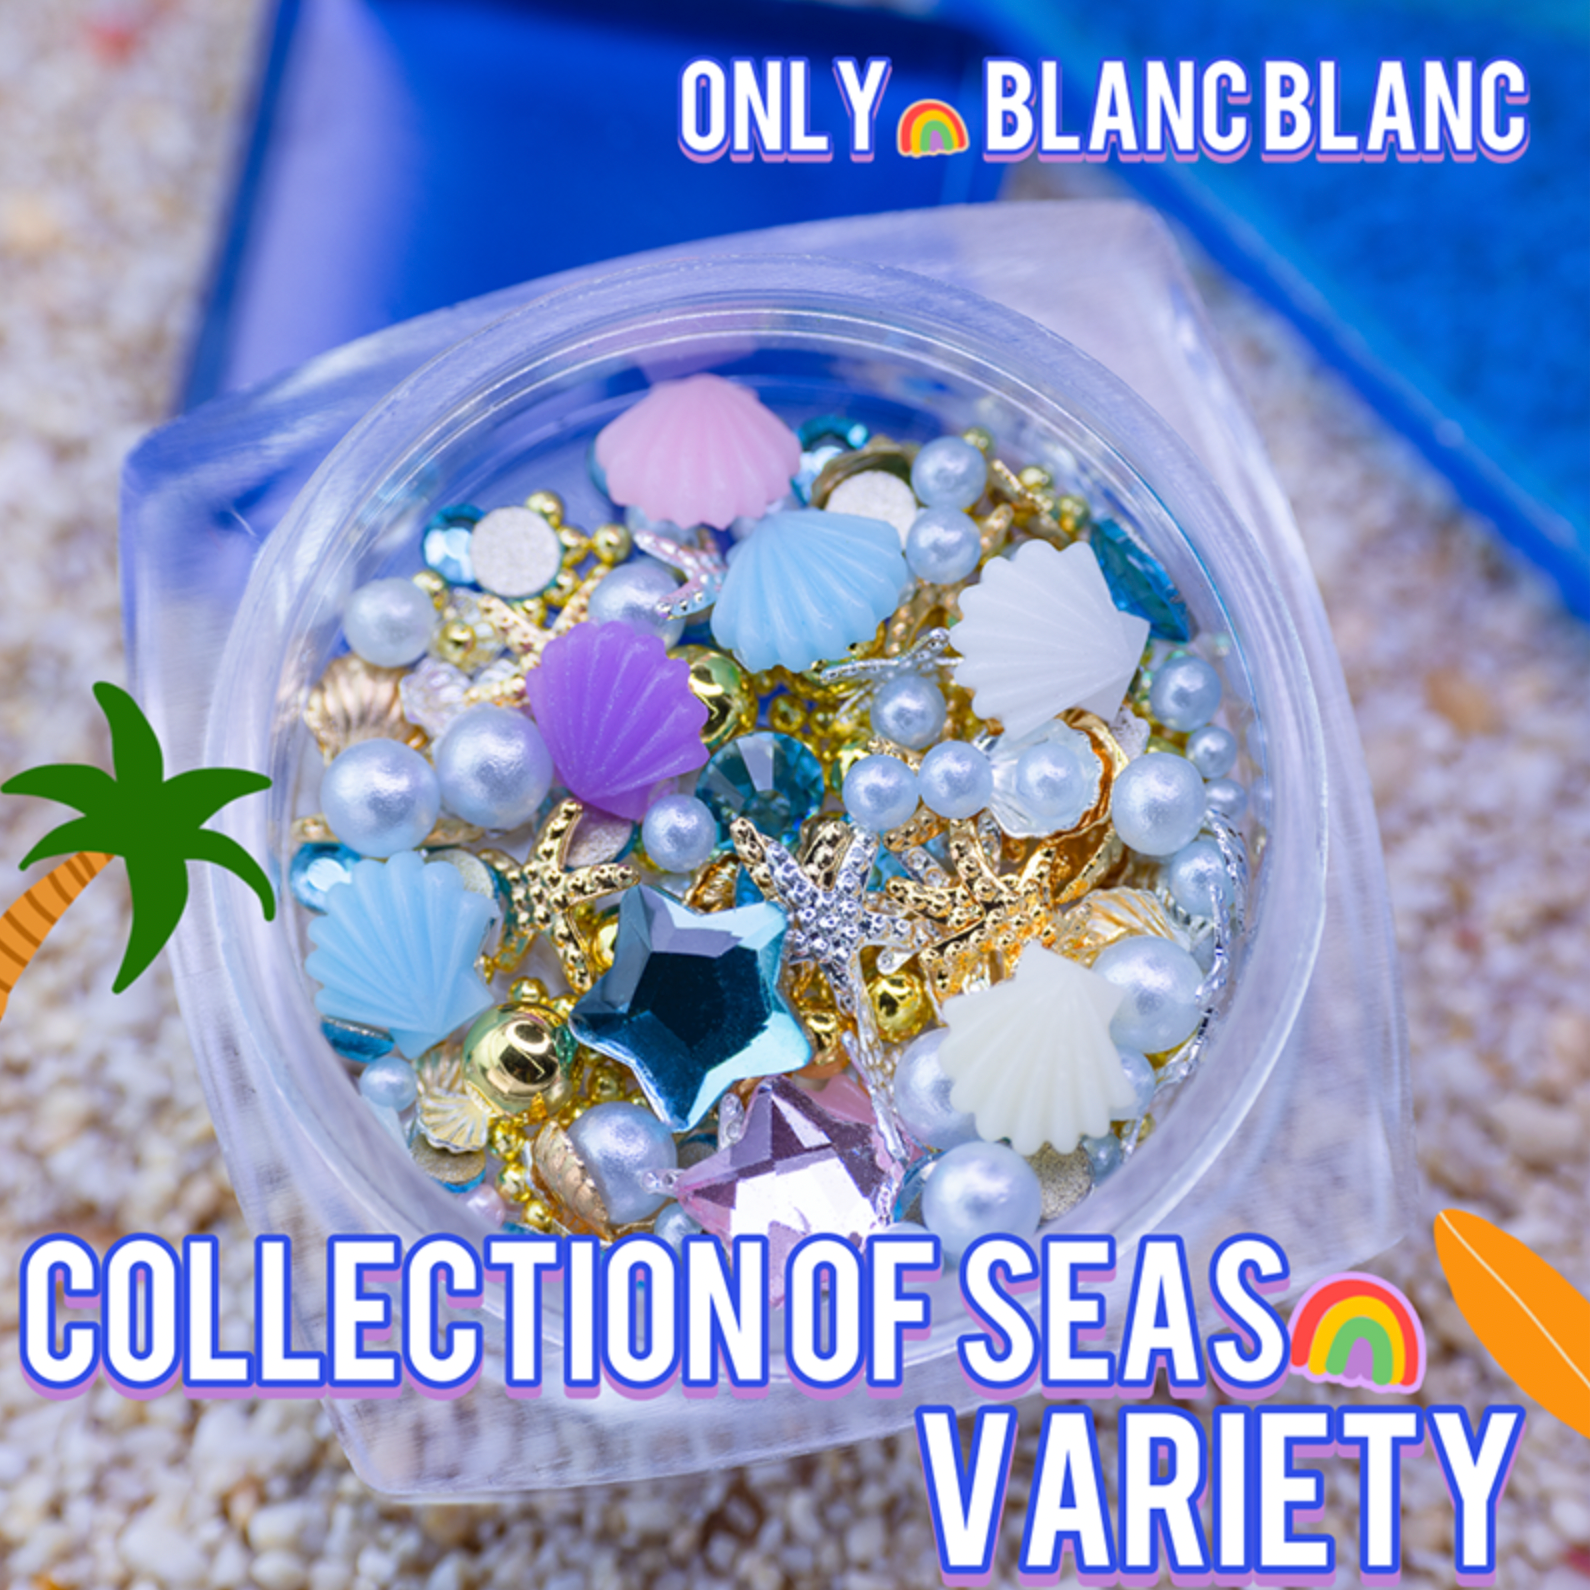 BLANC BLANC Collection of seas charm set